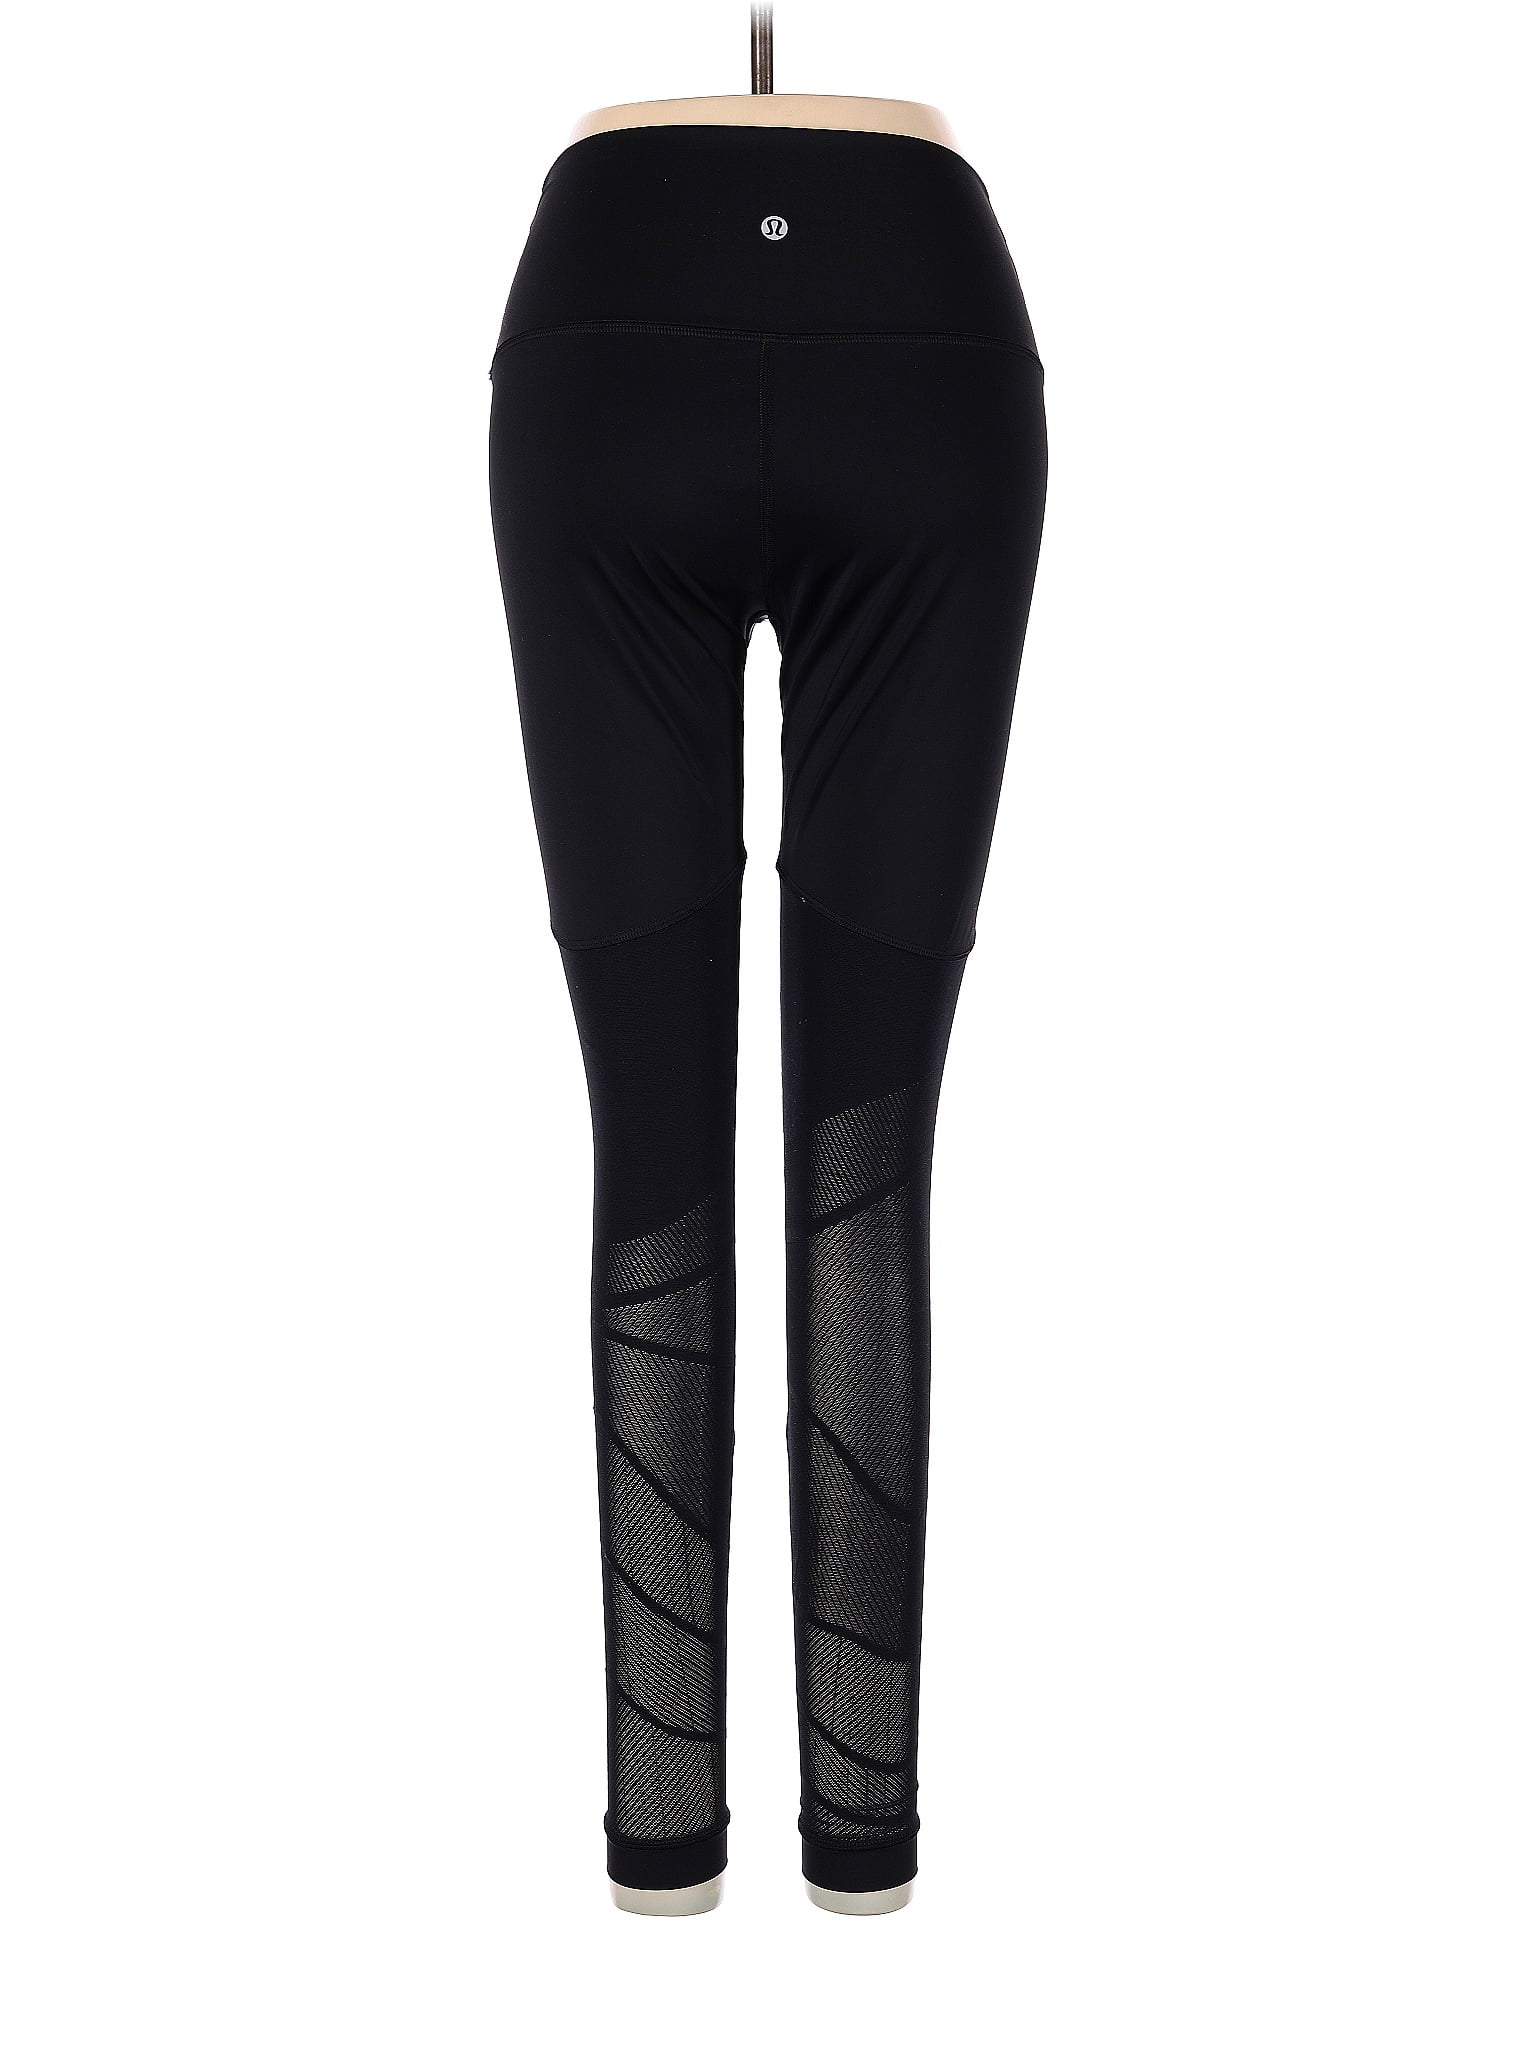 Lululemon Yoga Pants Black Size 4 - $29 (63% Off Retail) - From Kate